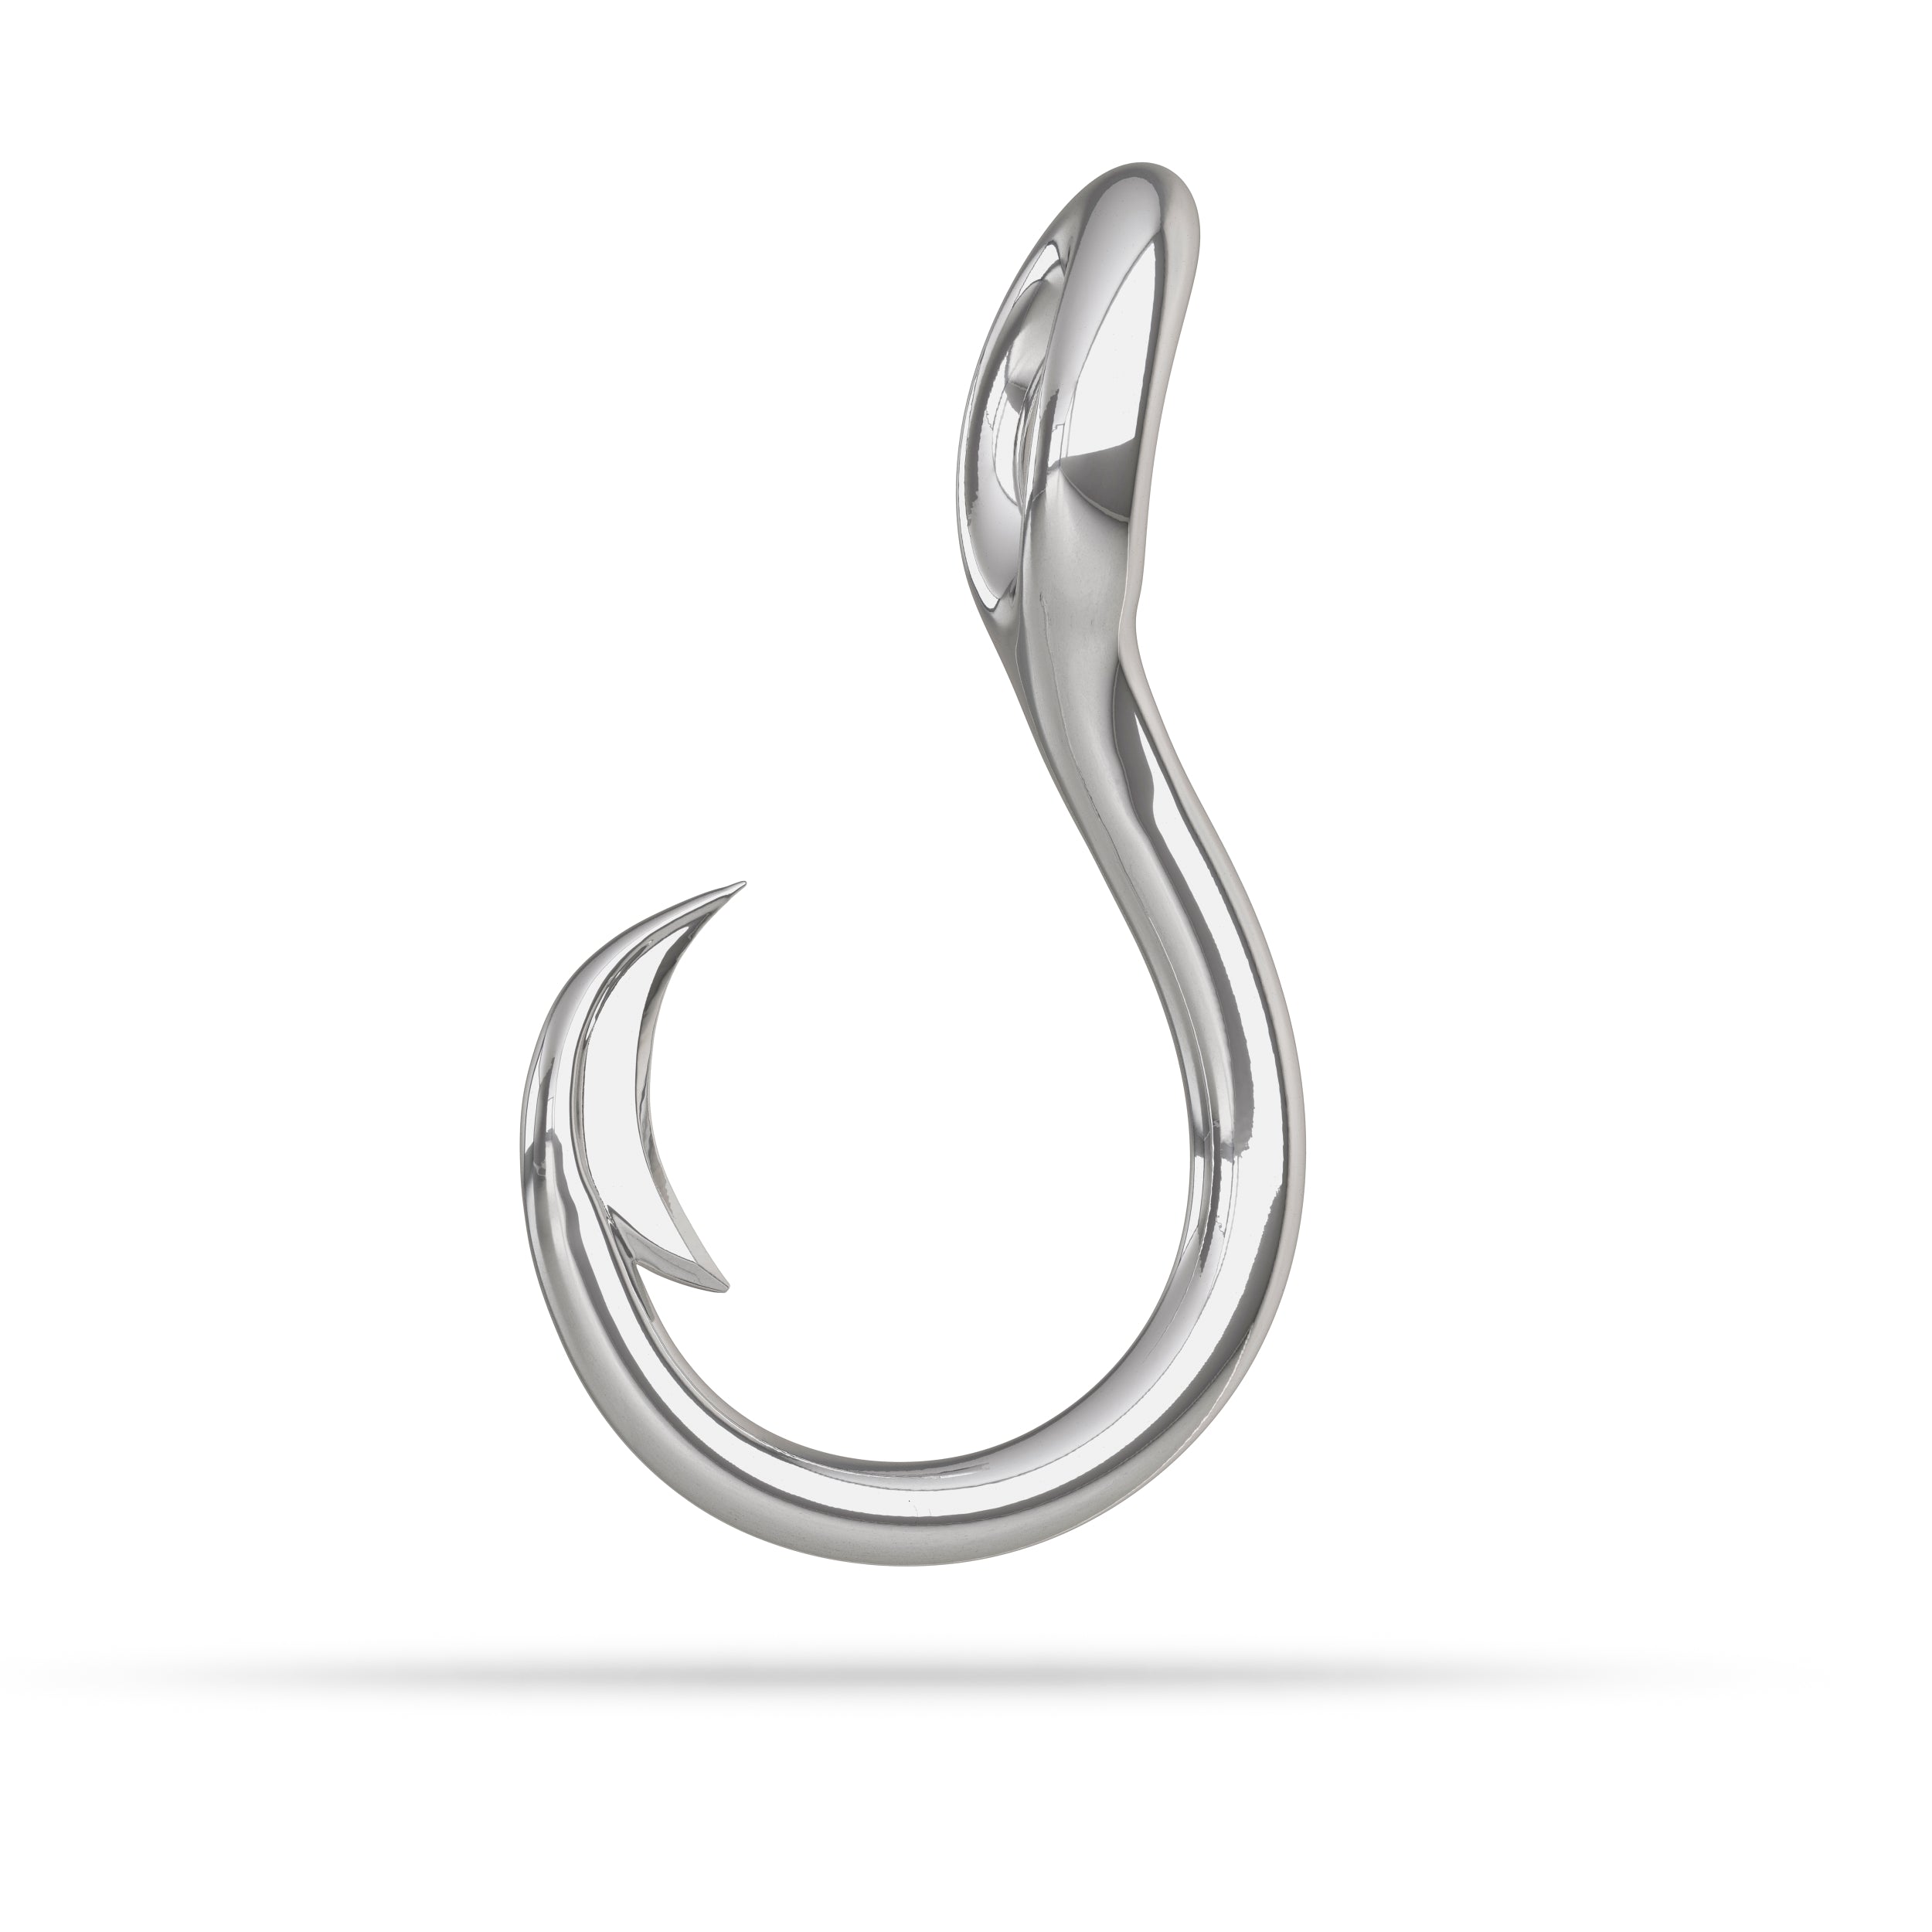 Small Silver fishing Circle hook pendant by Nautical Treasure